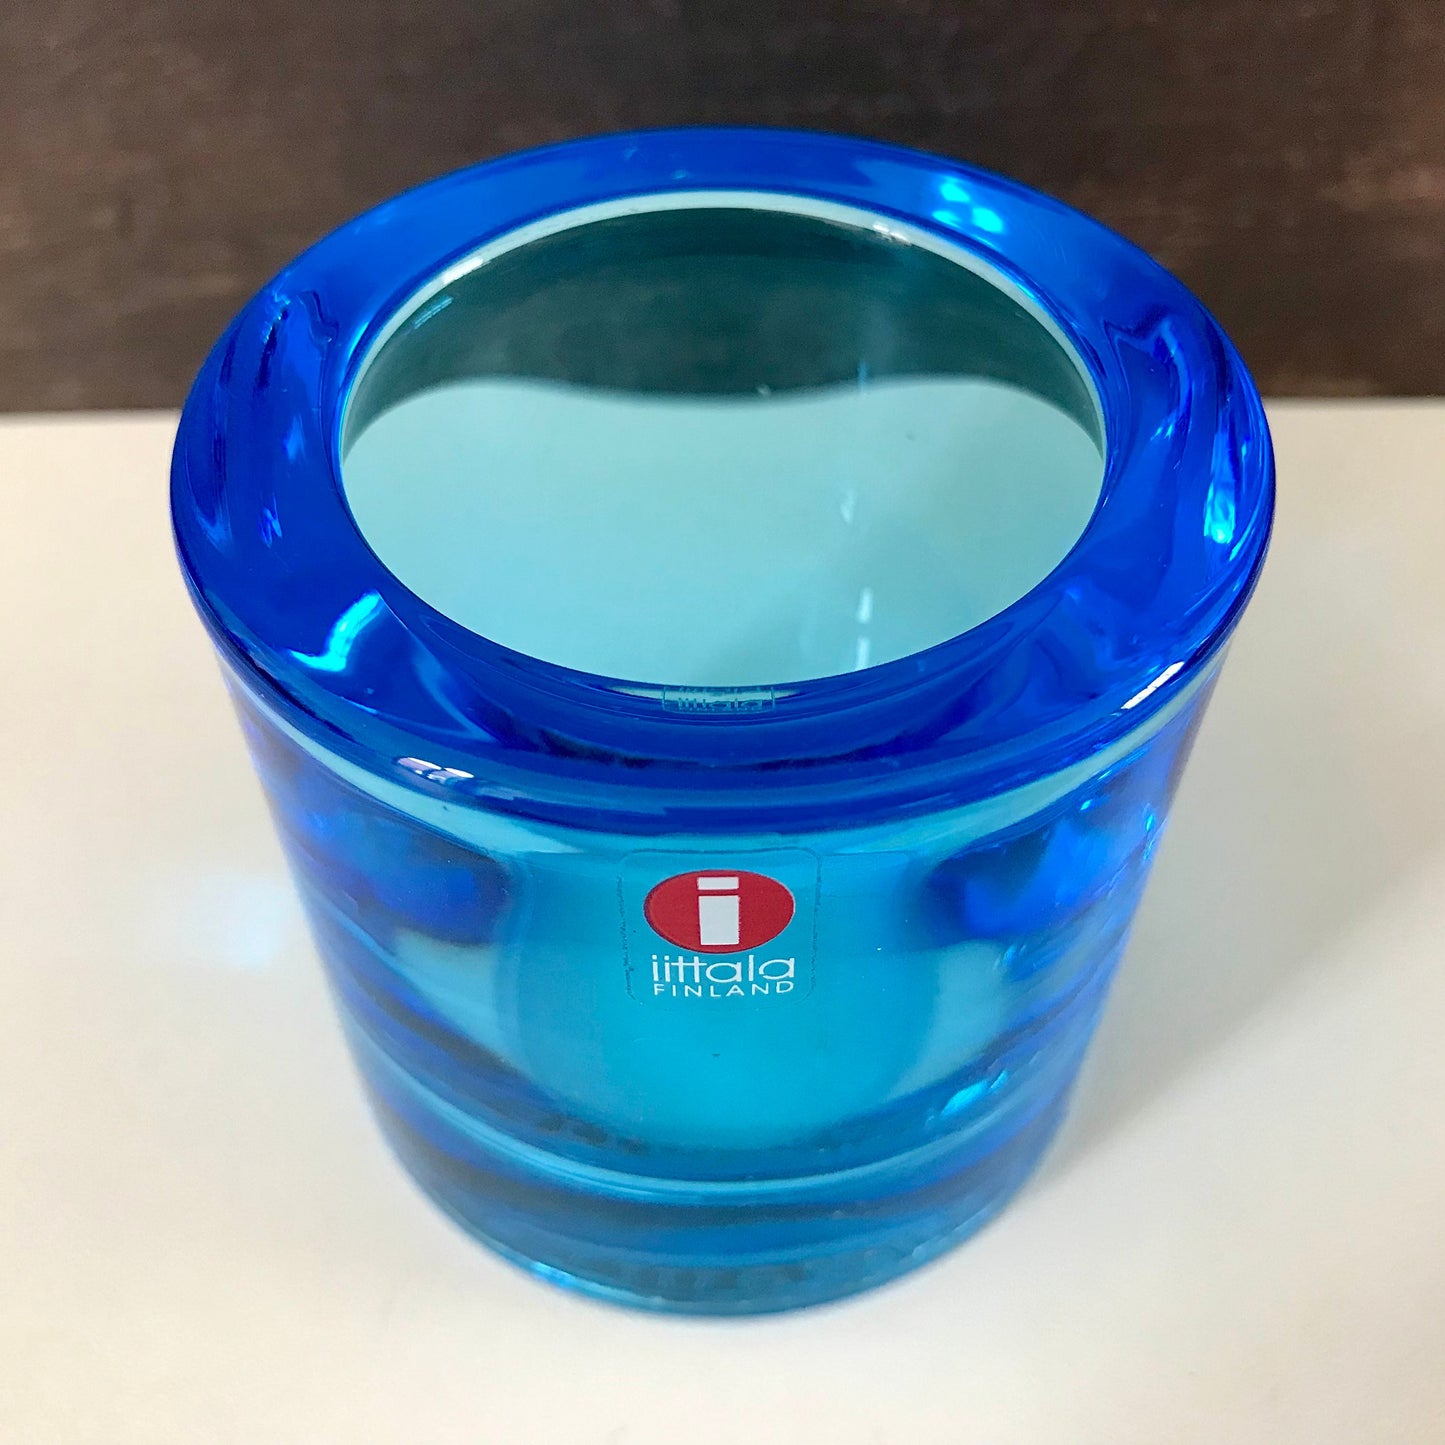 Iittala Kivi Teal Blue Glass Candle Tealight Holder Votive Finnish Design Turquoise